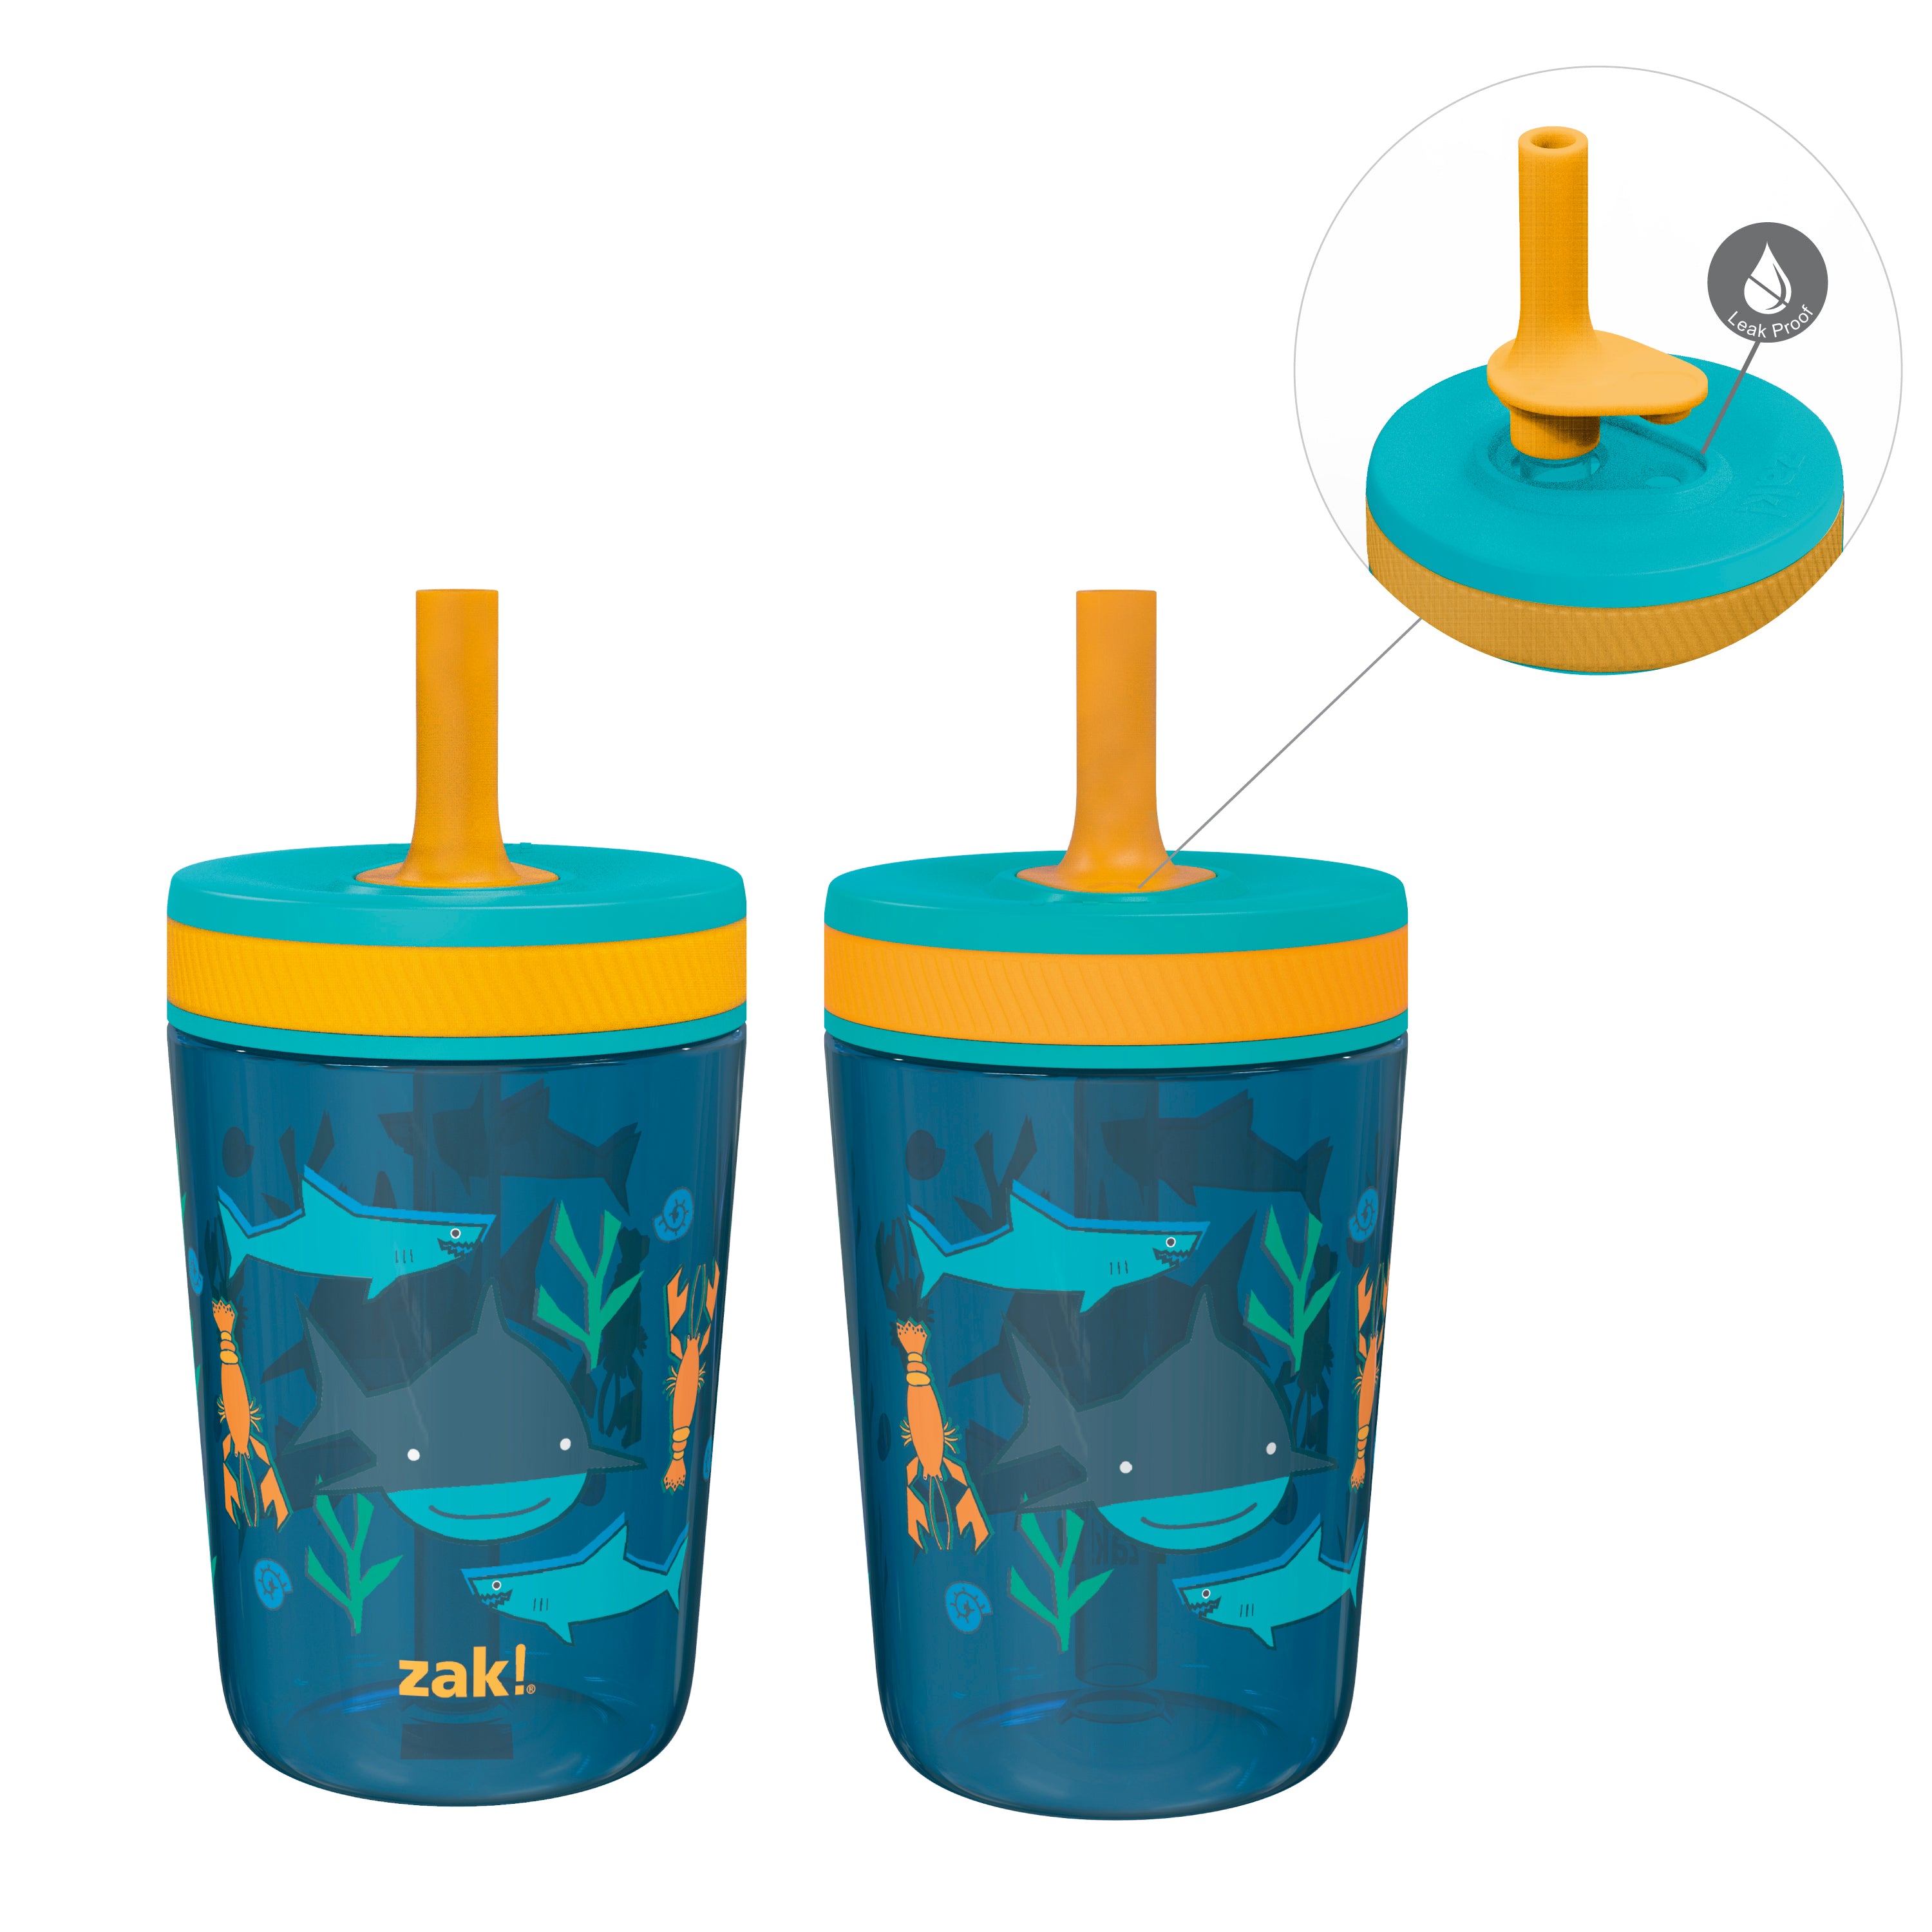 KX-WARE kx-ware sea ocean life 20-ounce plastic tumbler drinking glasses  mixed drinkware sets, set of 8